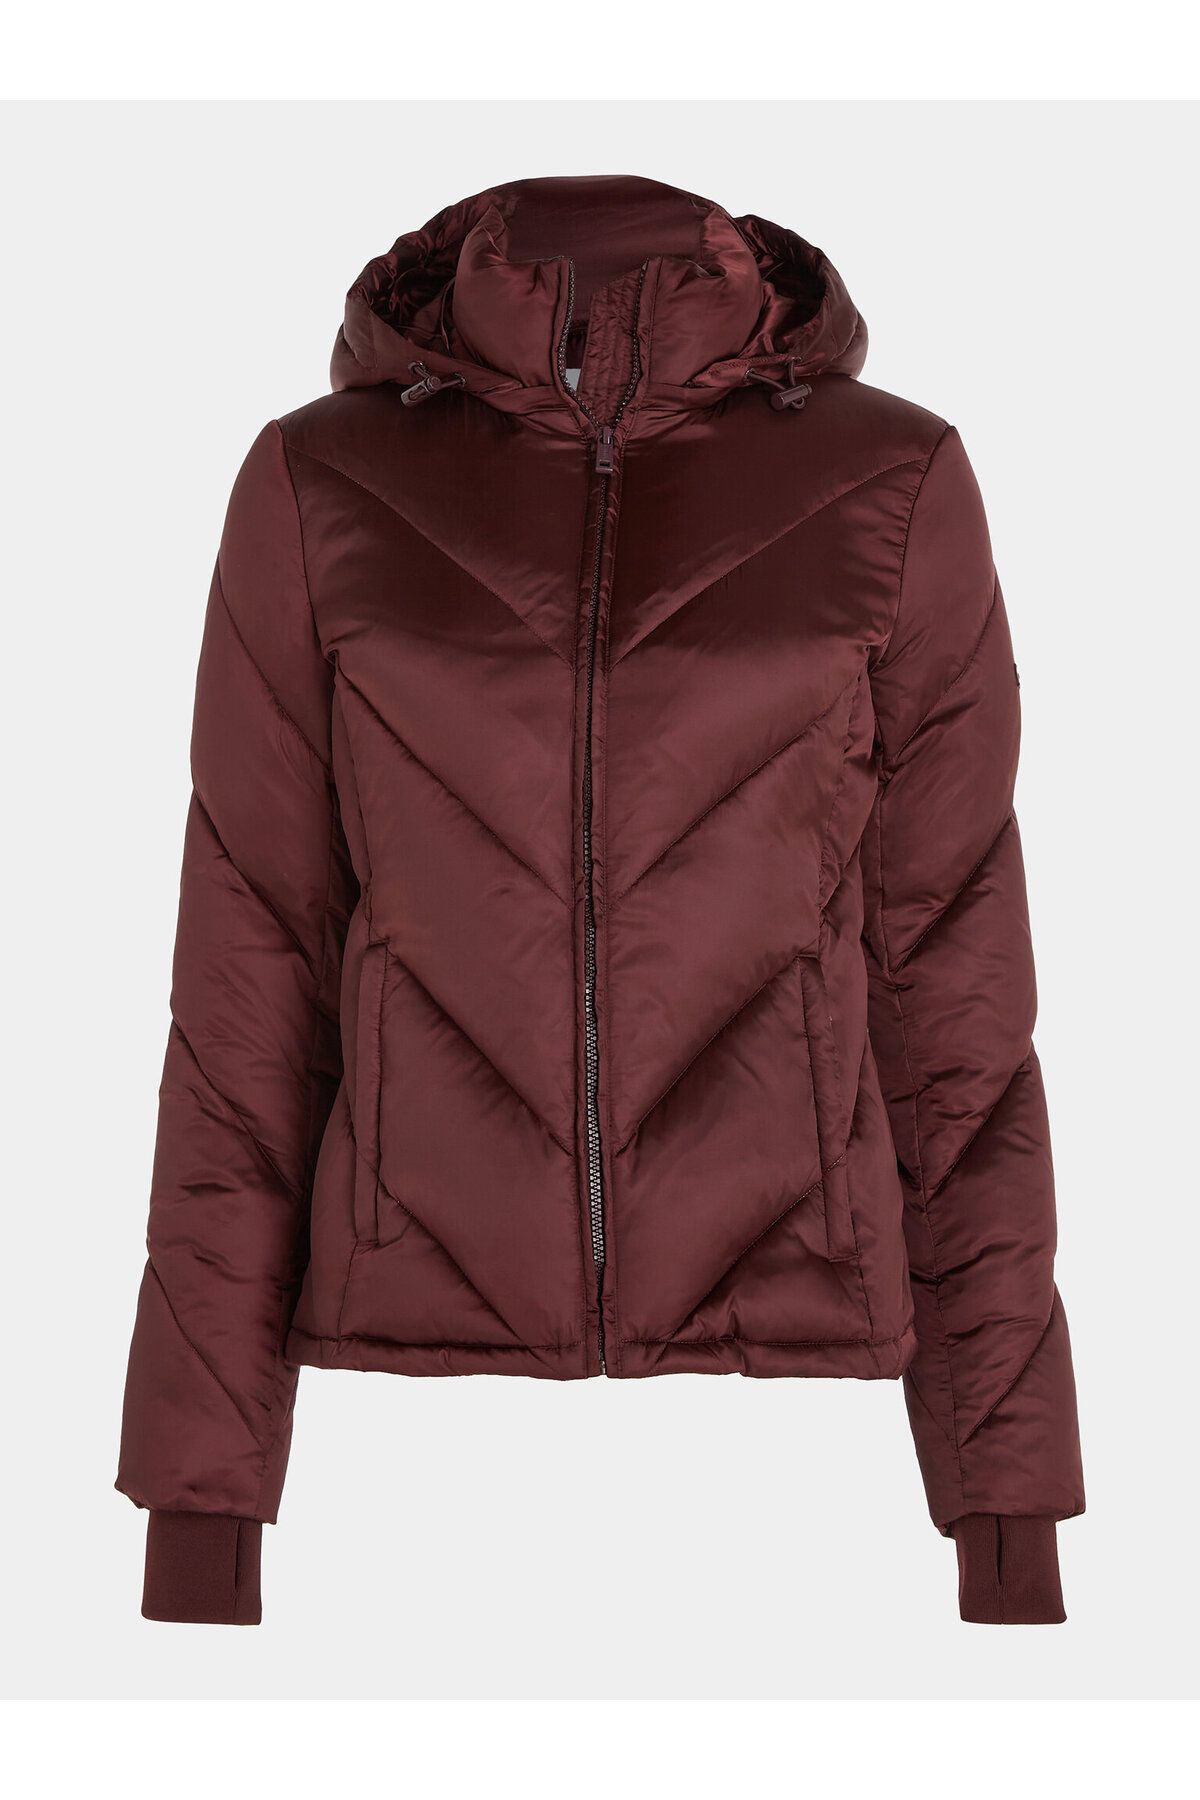 Calvin Klein Winter Jacket - Burgundy - Relaxed fit - Trendyol